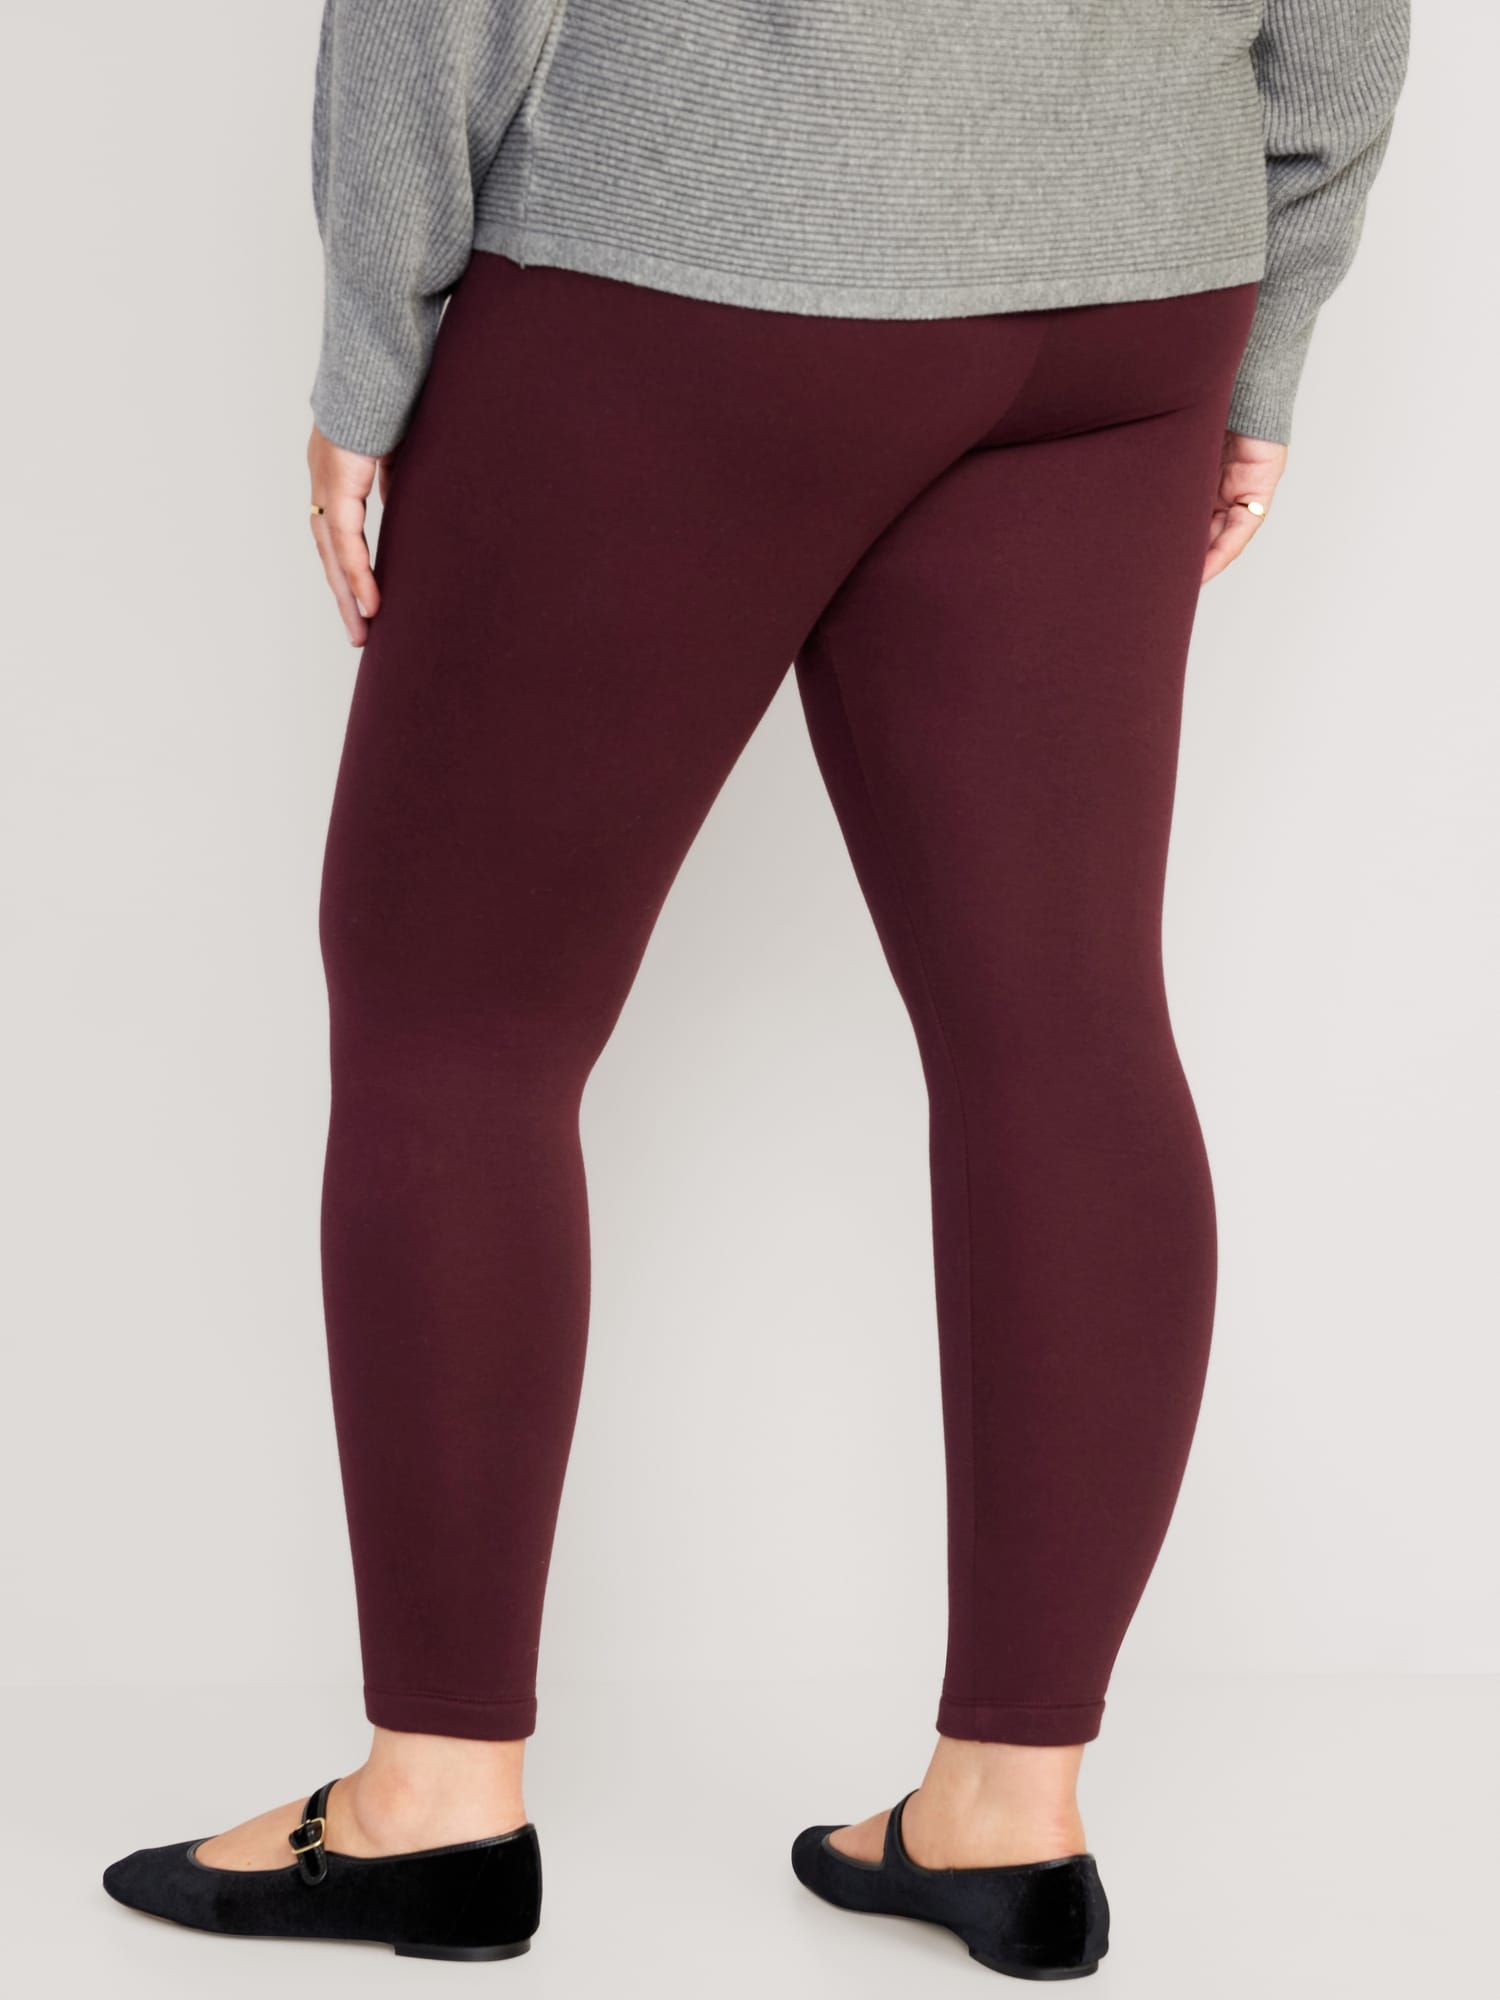 Plus Size Women's Ultra-Soft Fleece Lined Leggings in Solid Colors